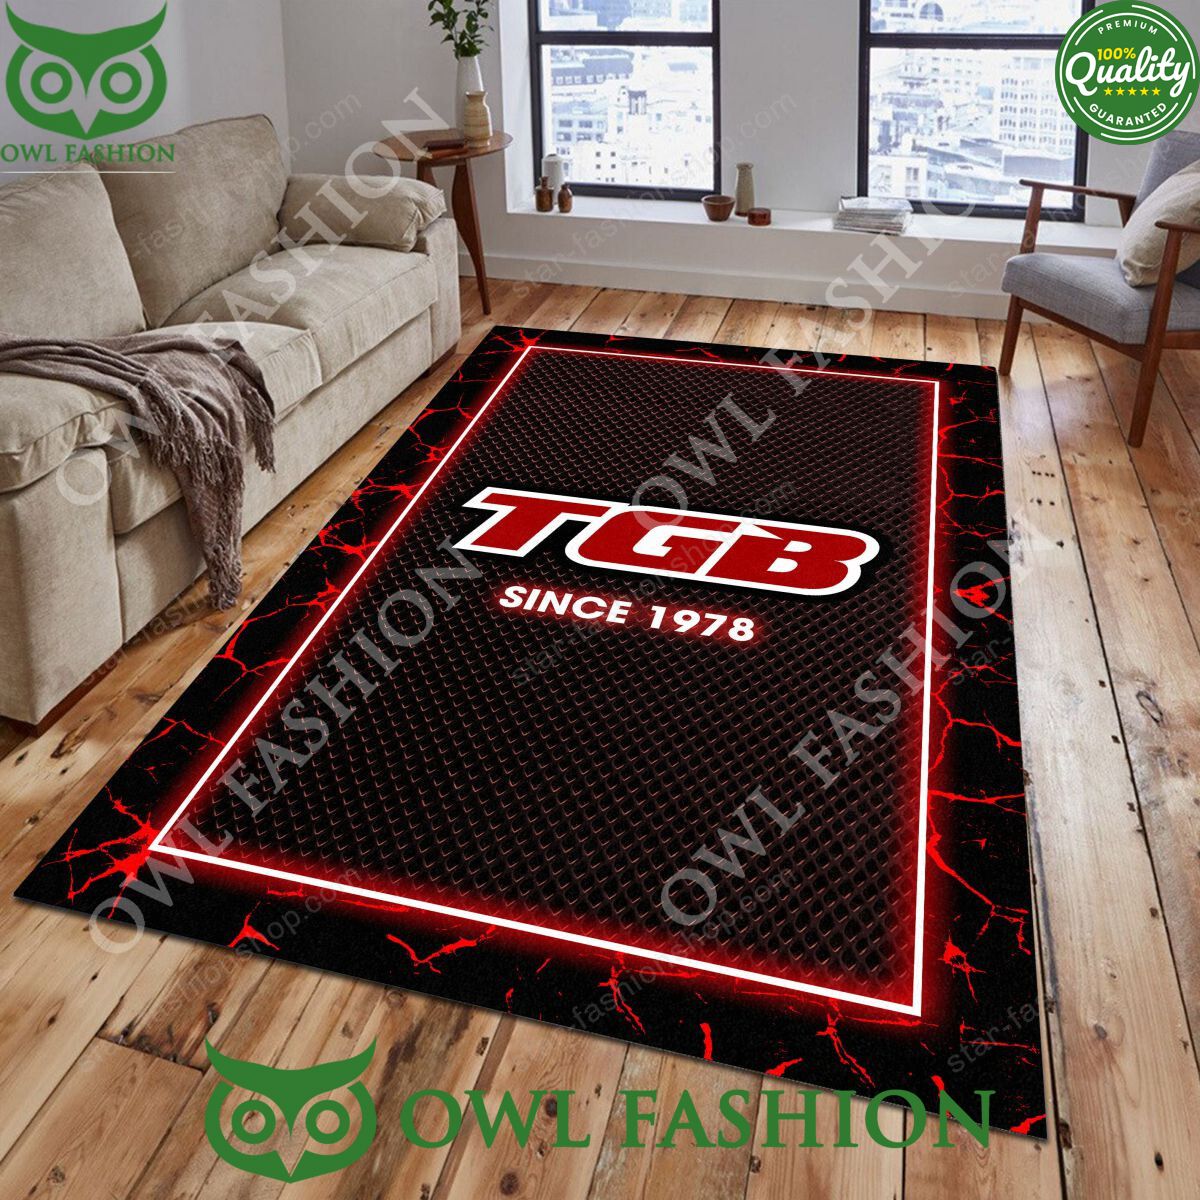 tgb motorcycles brand lighting rug carpet 1 Z97Bu.jpg